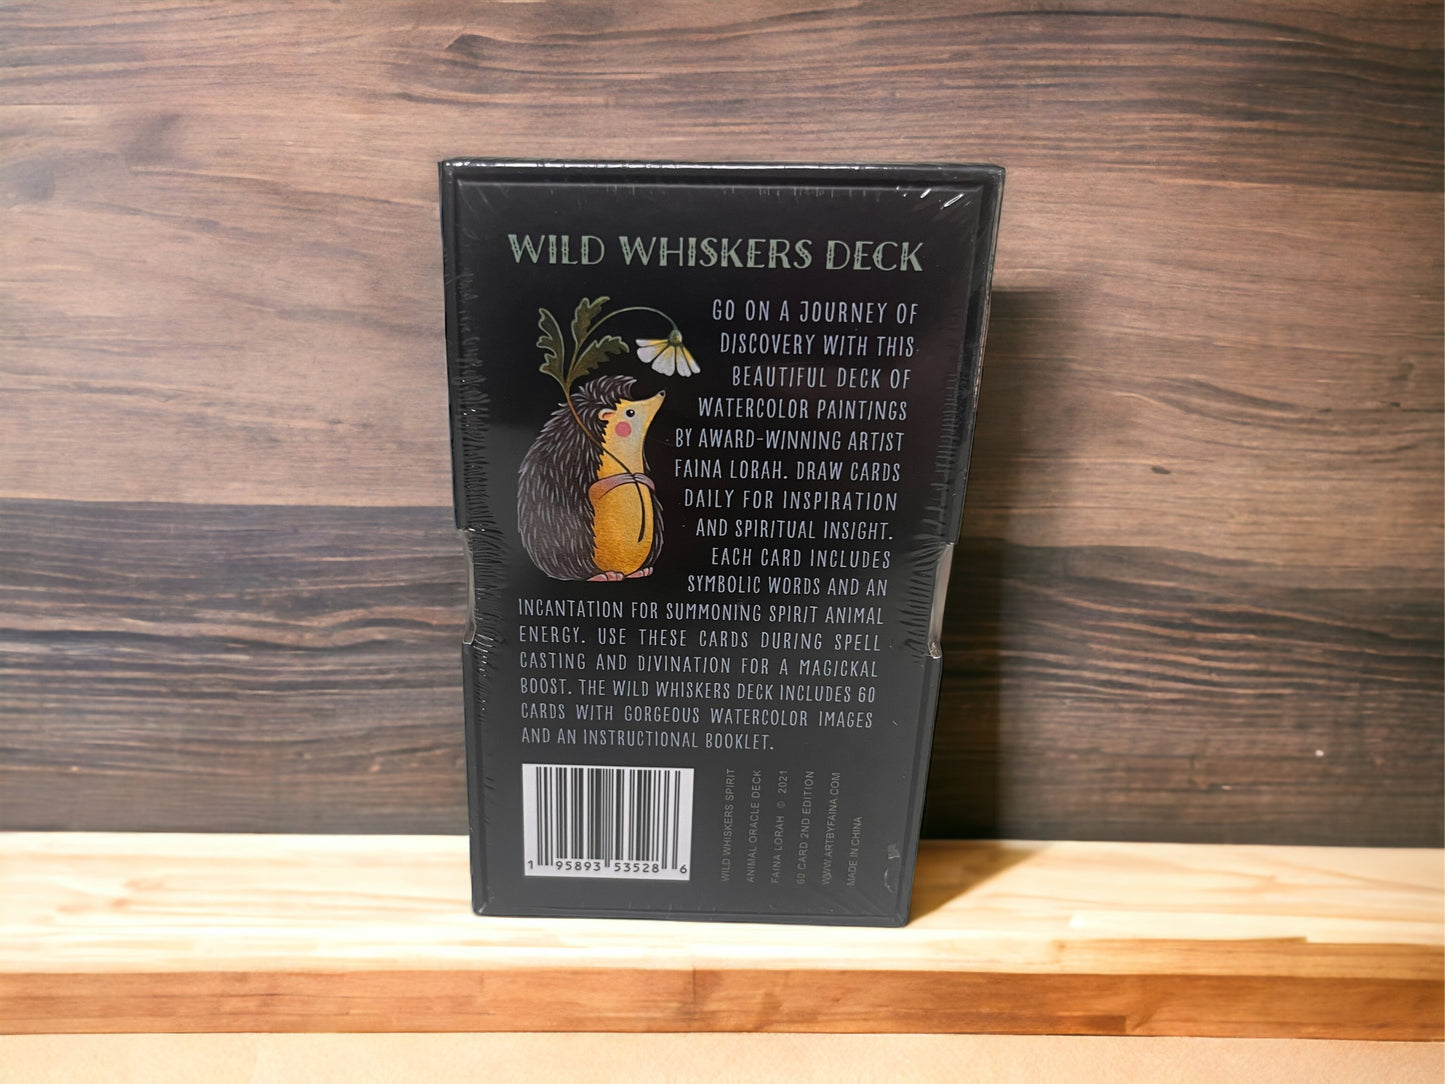 Wild Whiskers Spirit Animal Oracle Divination Cards - Faina Lorah